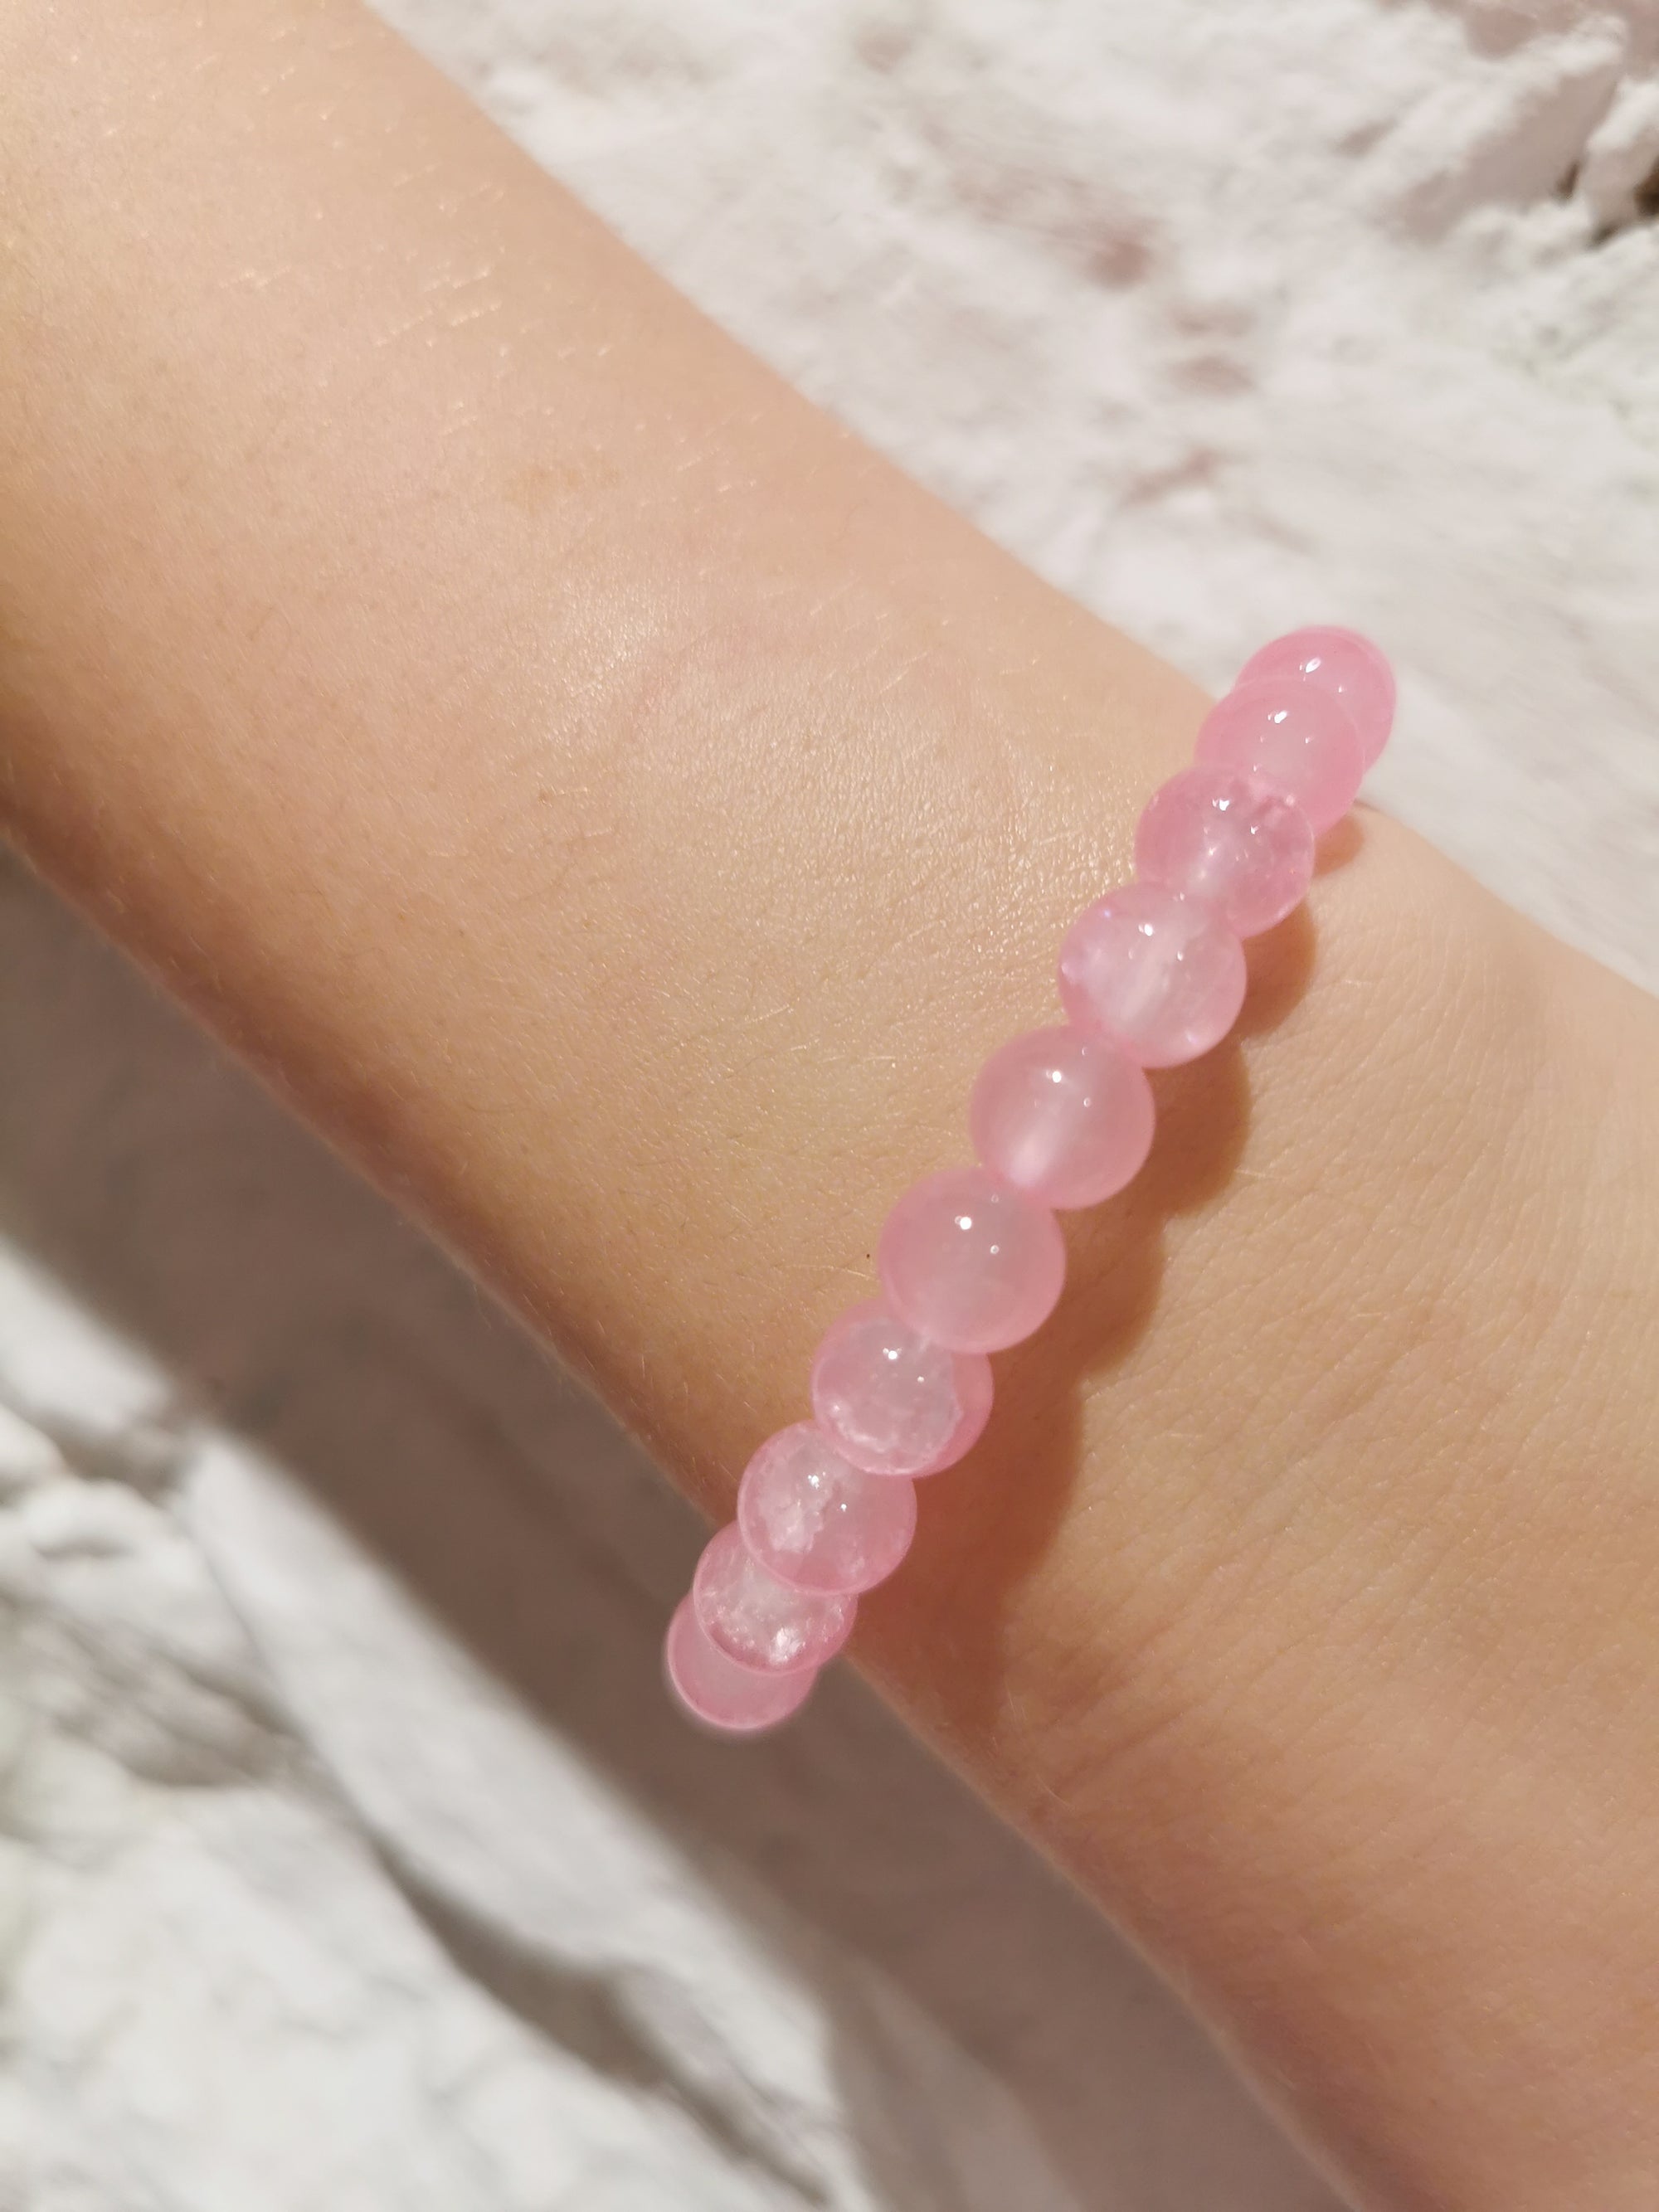 Yosie armband pink - Barts